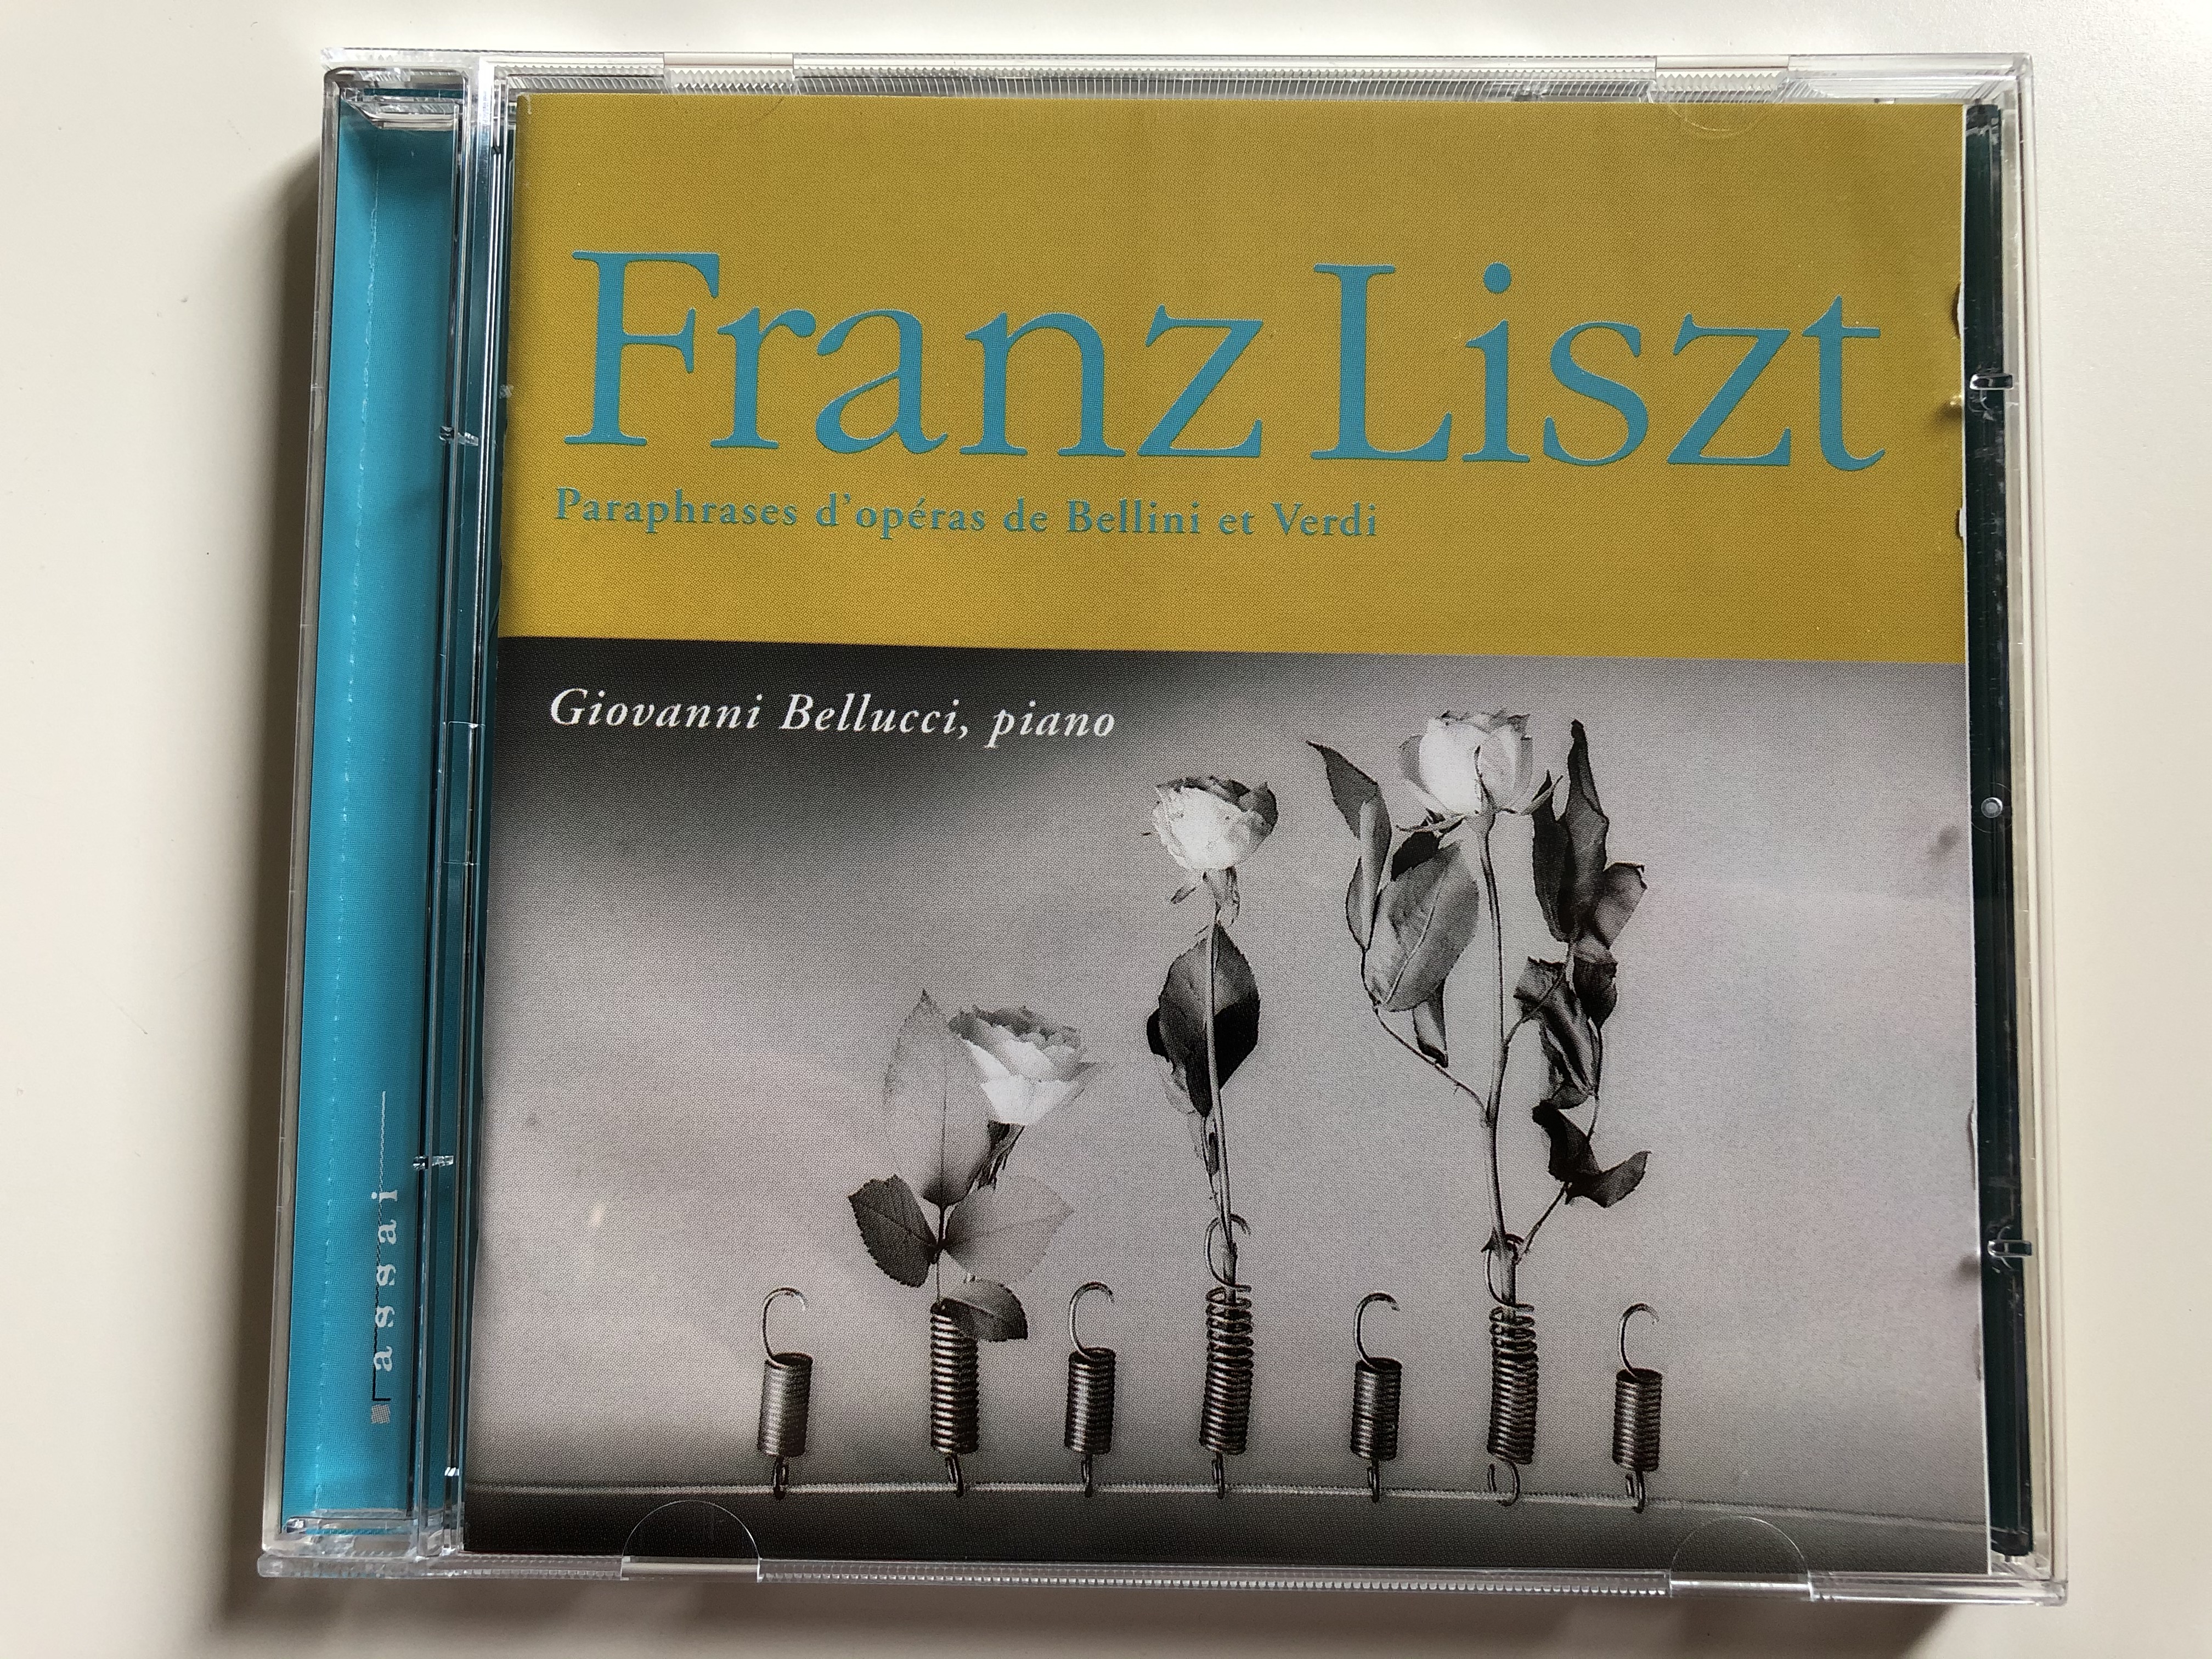 franz-liszt-paraphrases-d-operas-de-bellini-et-verdi-giovanni-bellucci-piano-assai-audio-cd-222172-1-.jpg